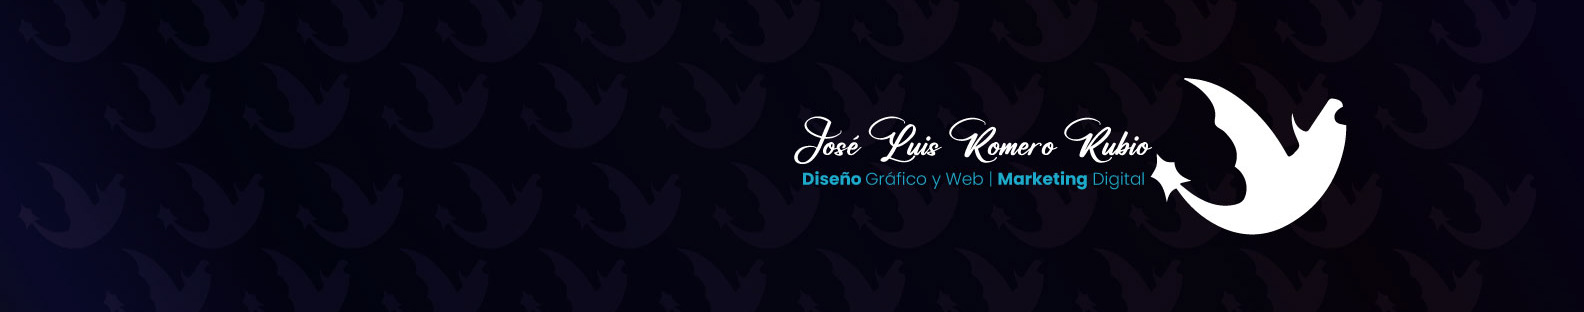 José Luis Romero Rubio's profile banner